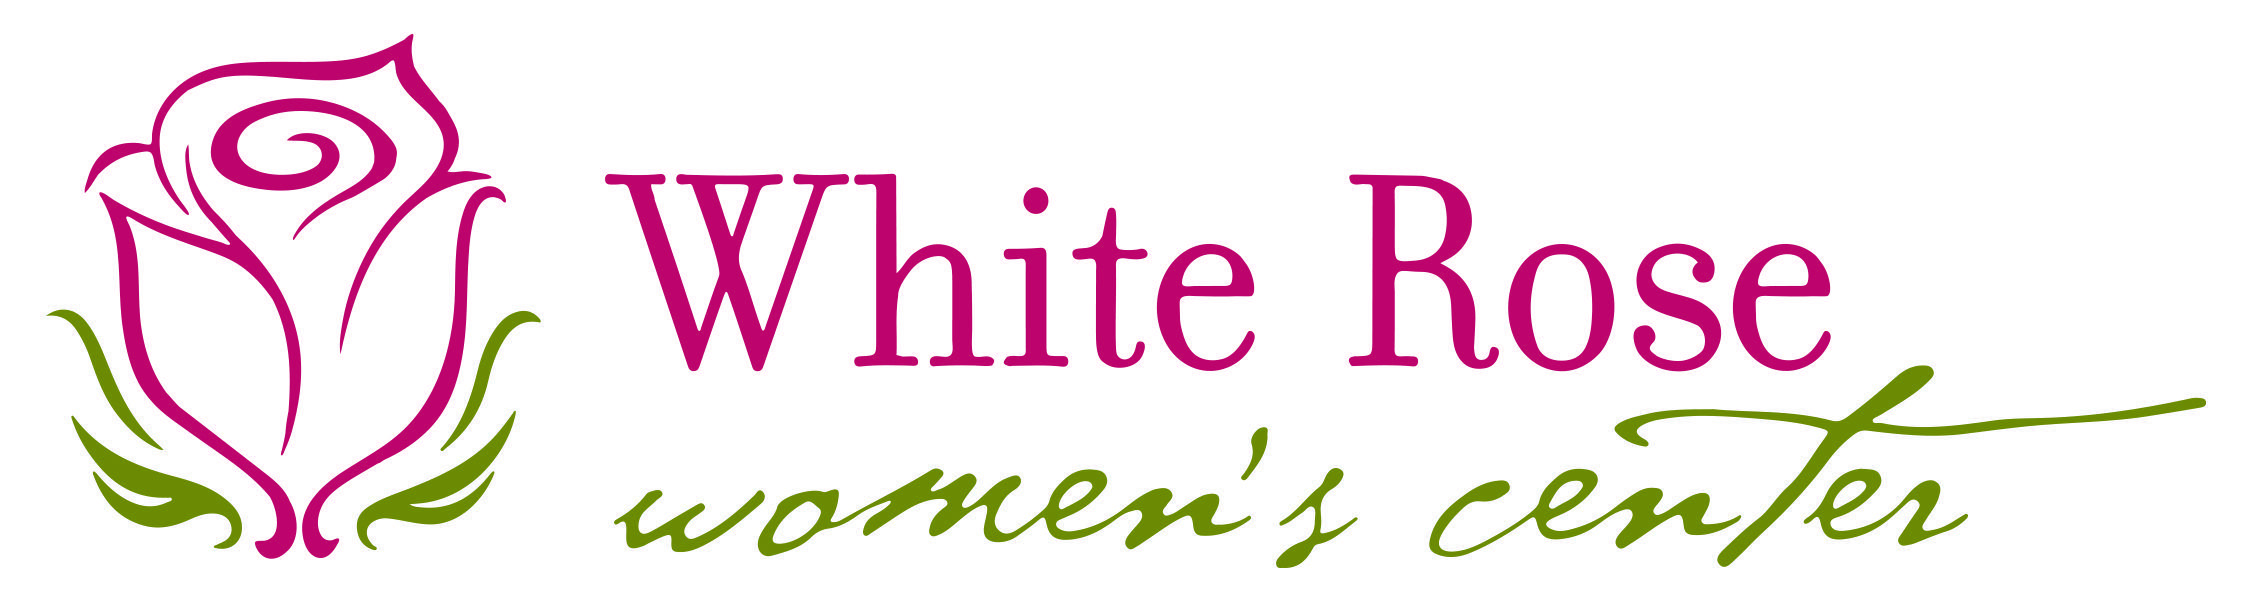 White Rose Logo - LogoDix